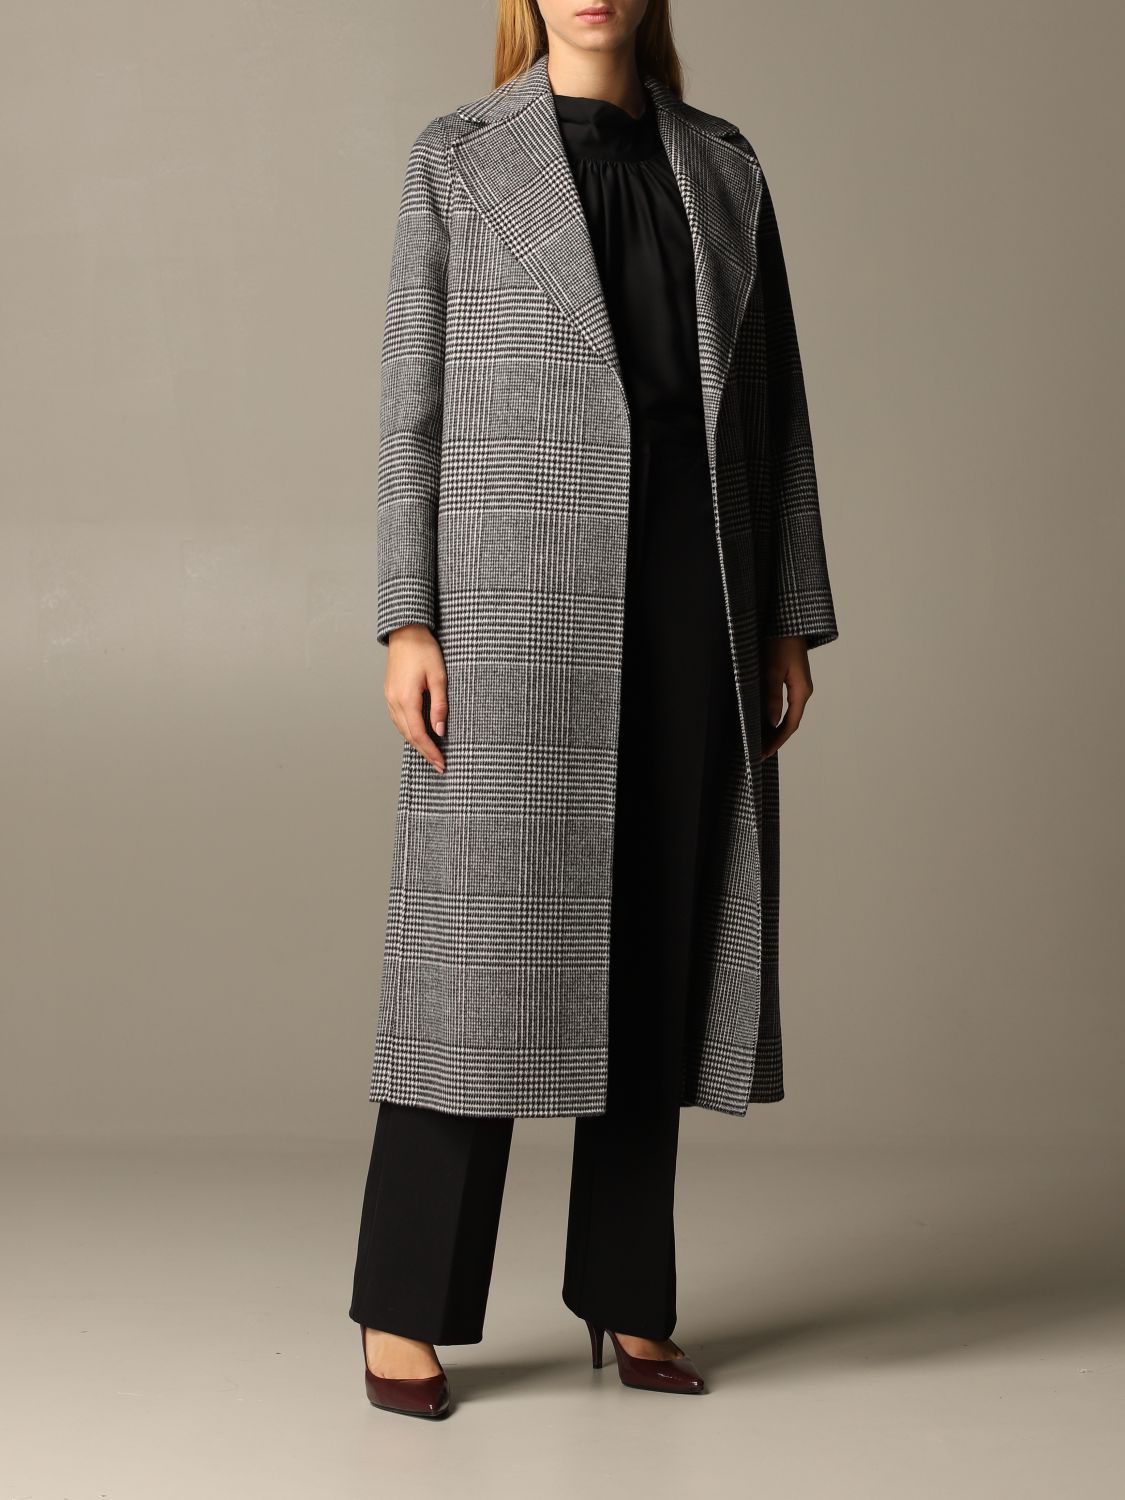 S MAX MARA: Fiorito coat in Prince of Wales wool | Coat S Max Mara ...